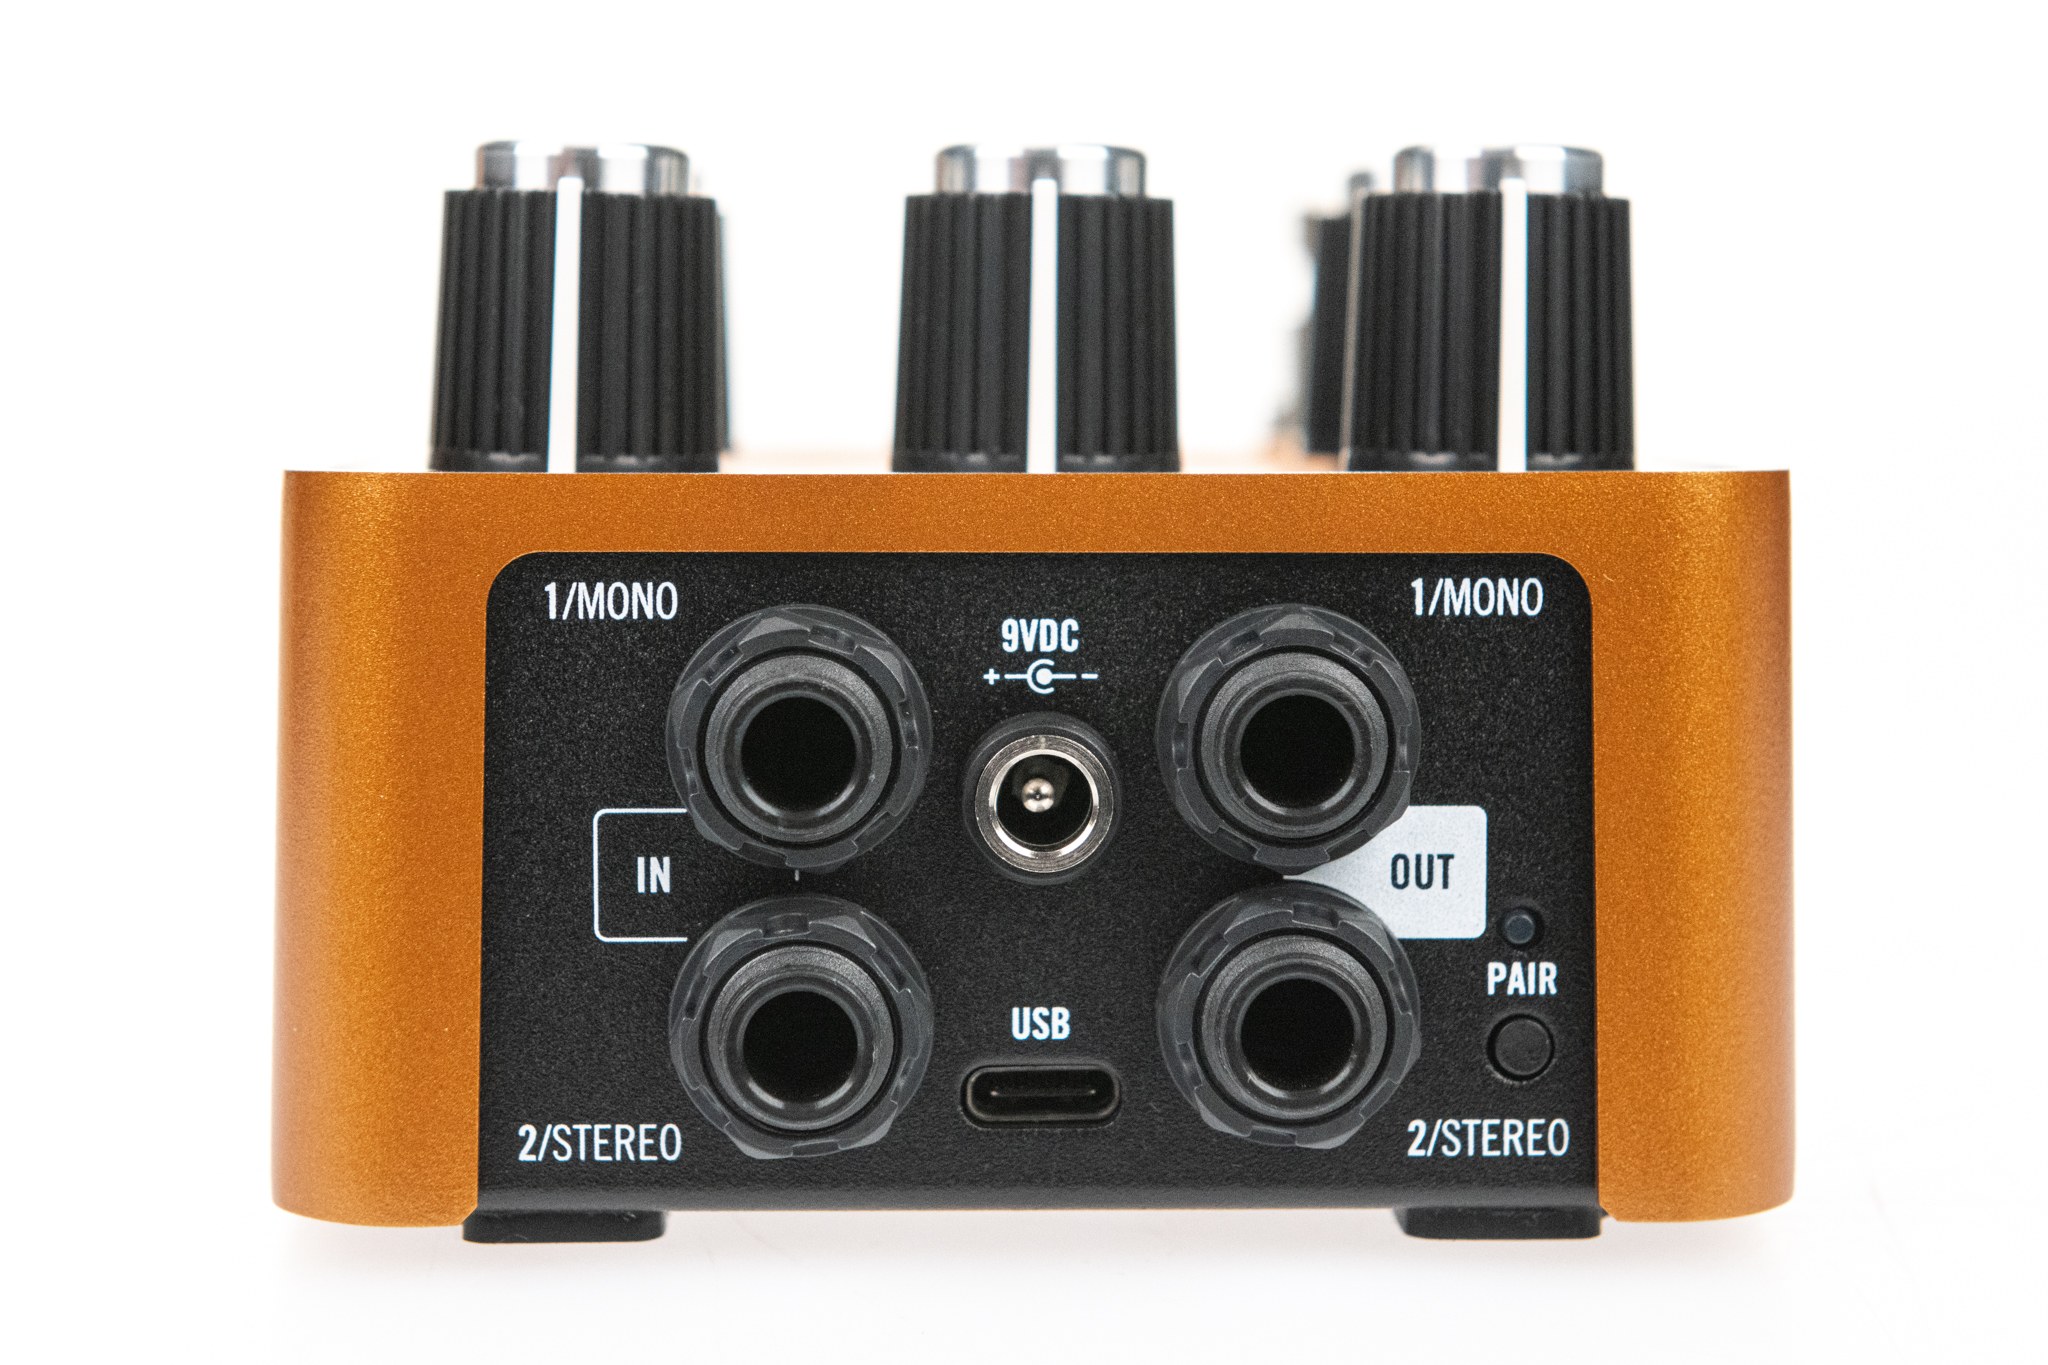 Universal Audio UAFX Woodrow ´55 Instrument Amplifier Pedal